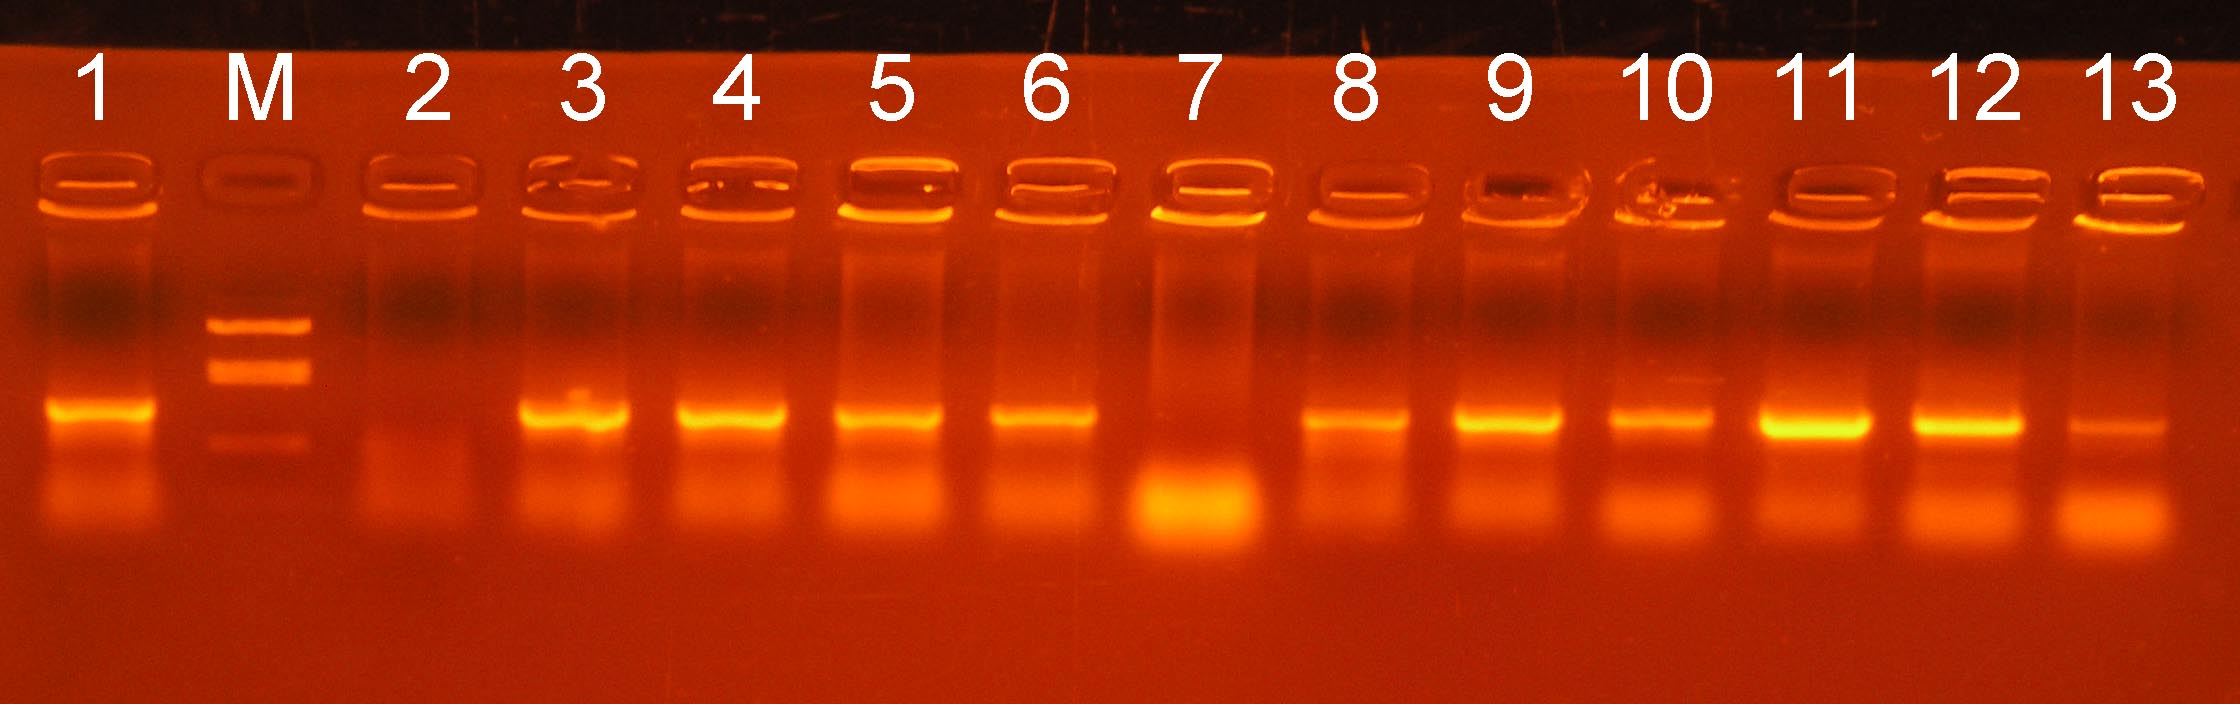 Rj[ PCR Q No. 2